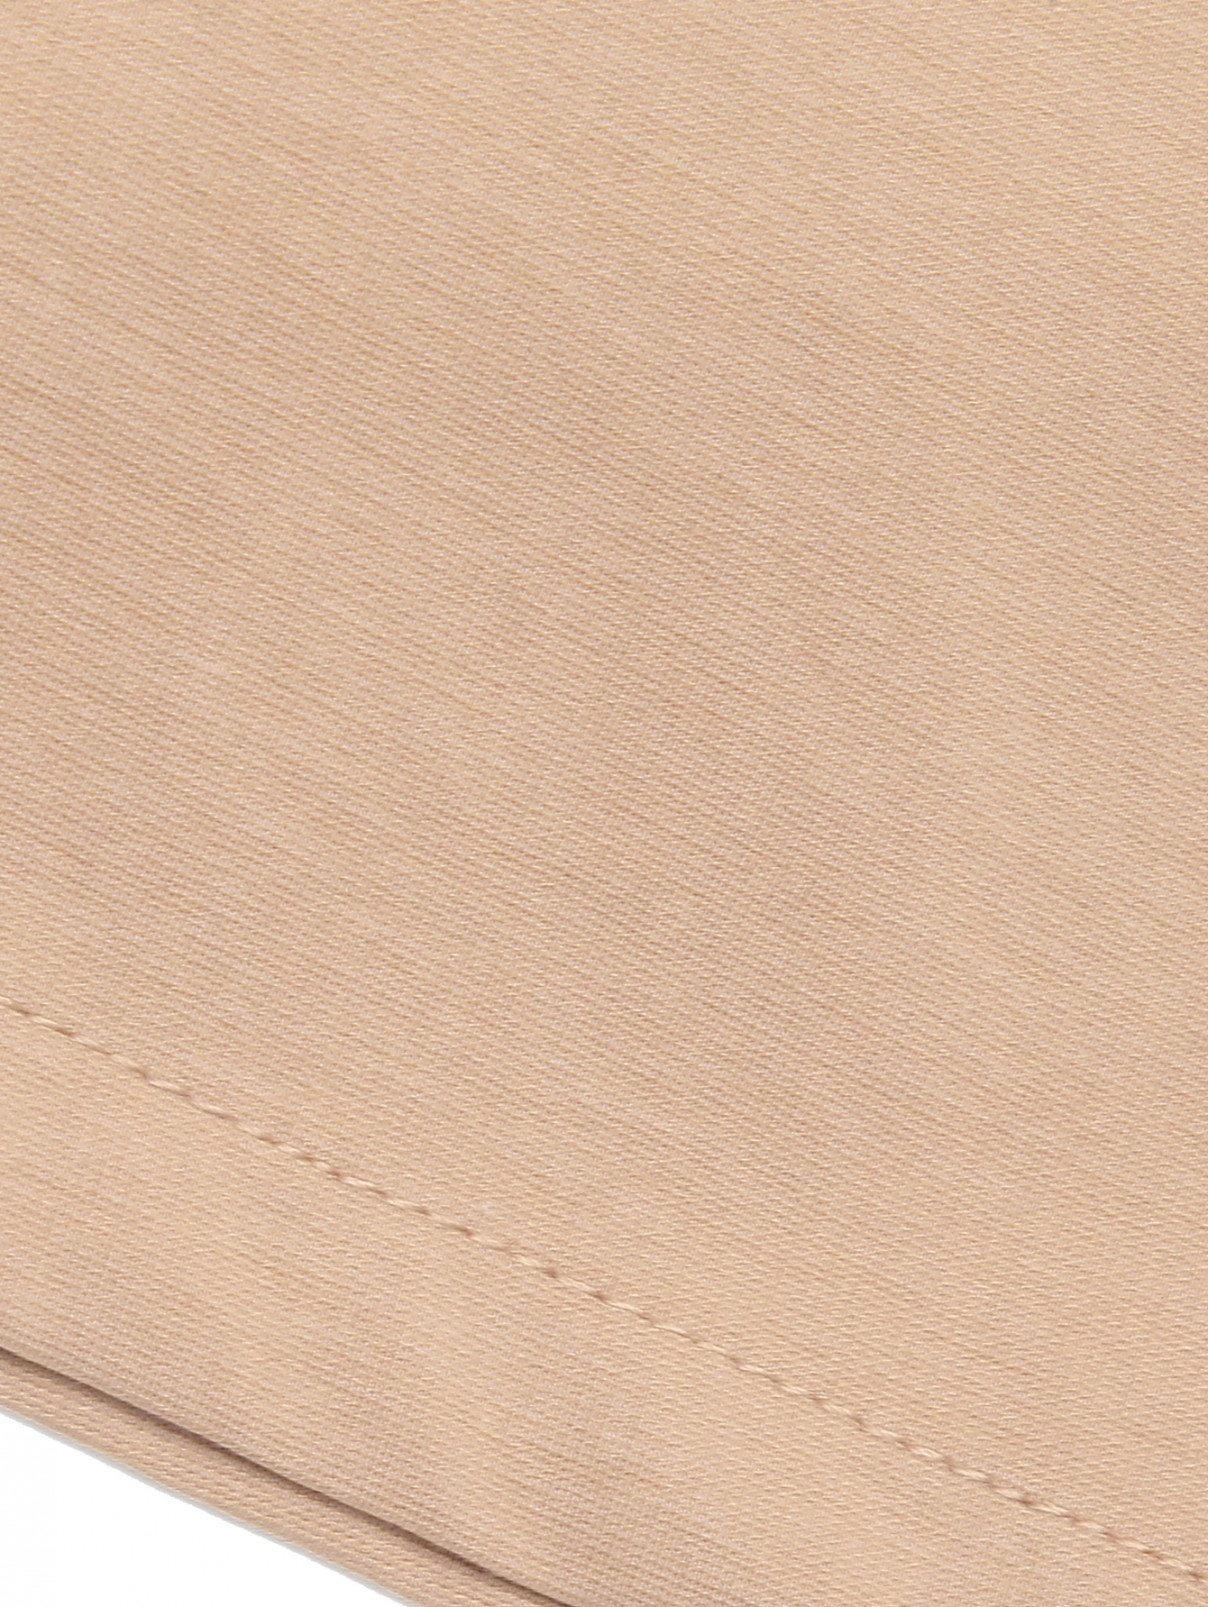 Трикотажные шорты на завязках Daniele Alessandrini  –  Деталь  – Цвет:  Бежевый